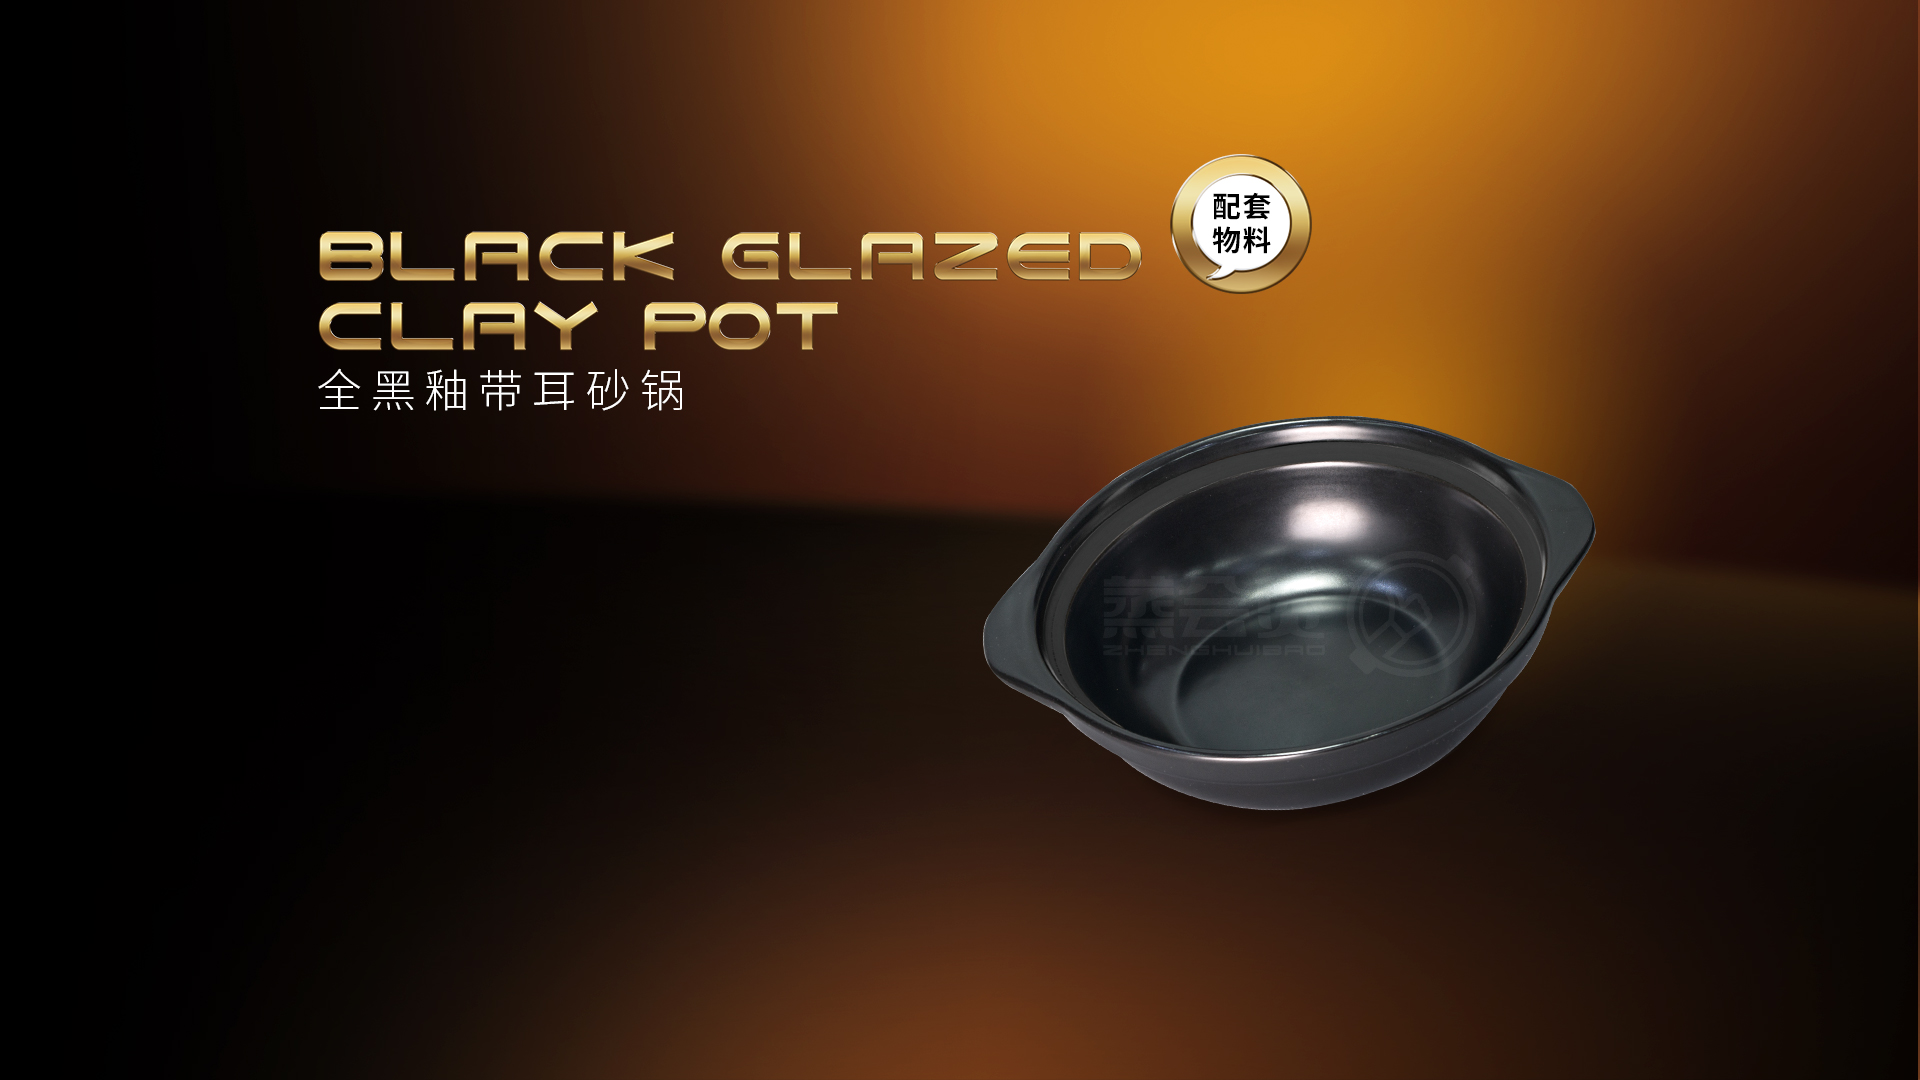 zhenghuibao_supporing_materials_black_glaze_clay_pot_details_page.jpg